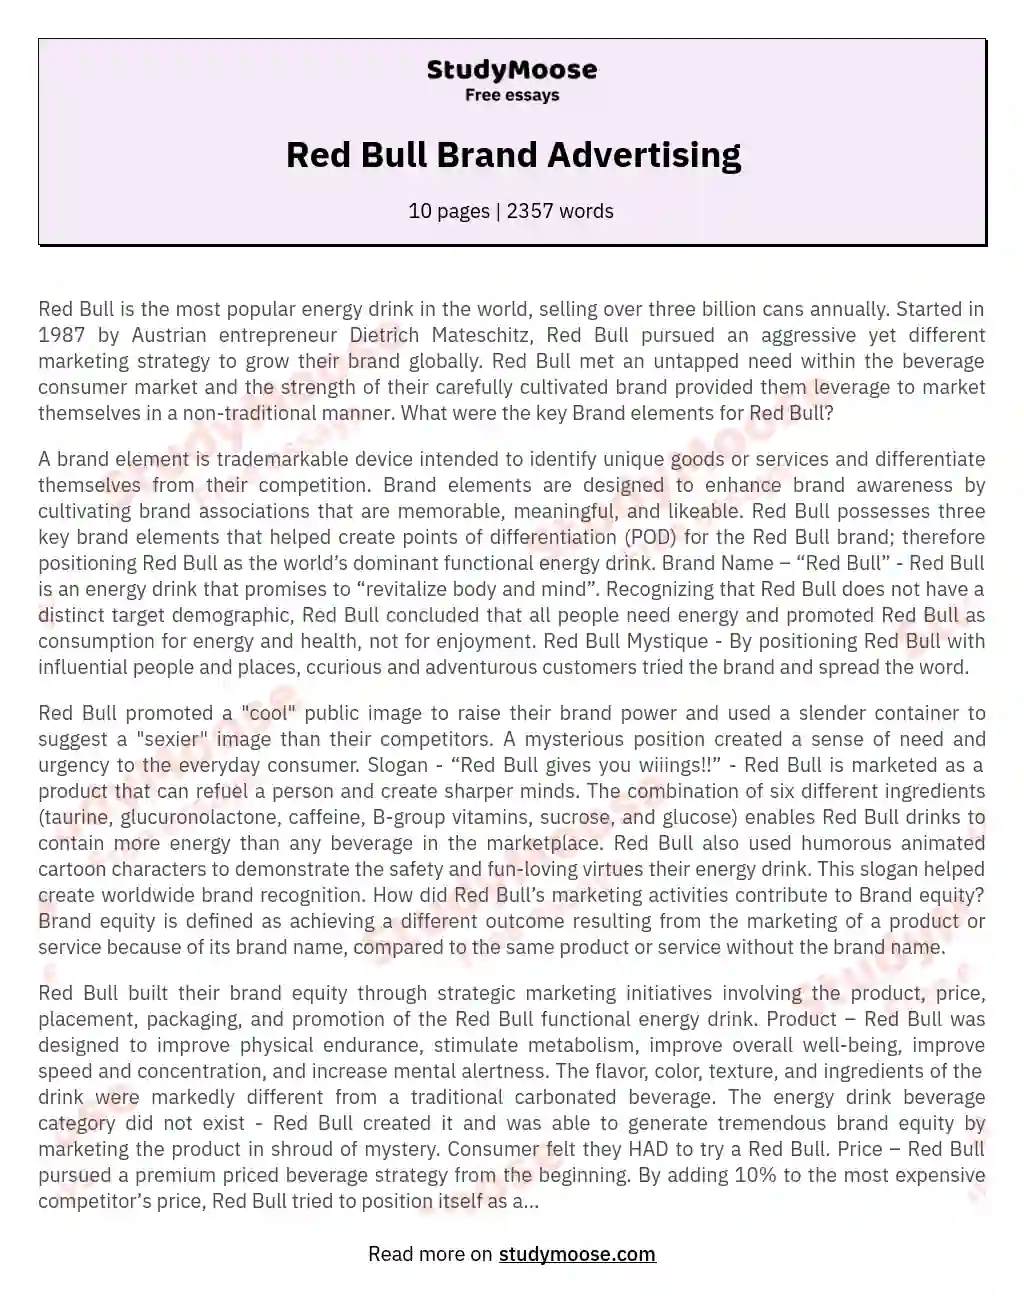 Red Bull Brand Advertising essay